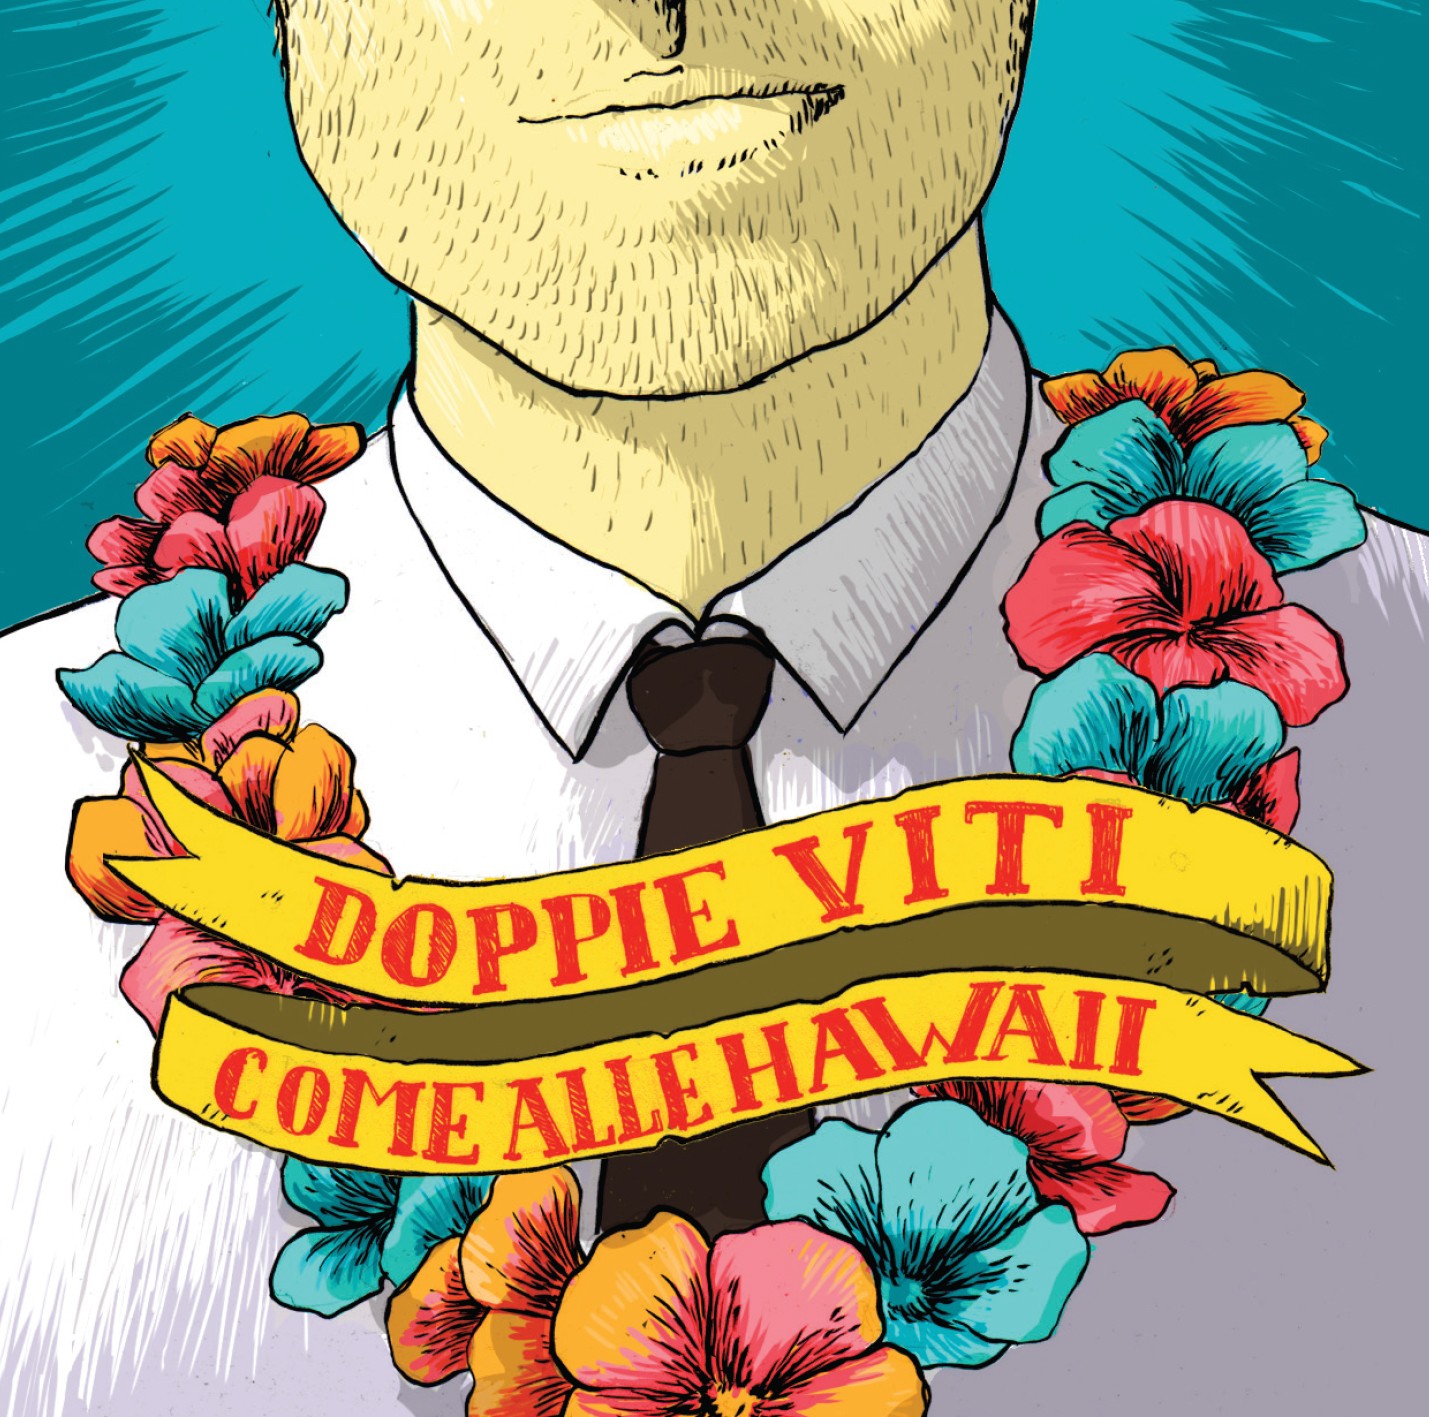 Doppie Viti_COMEALLEHAWAII